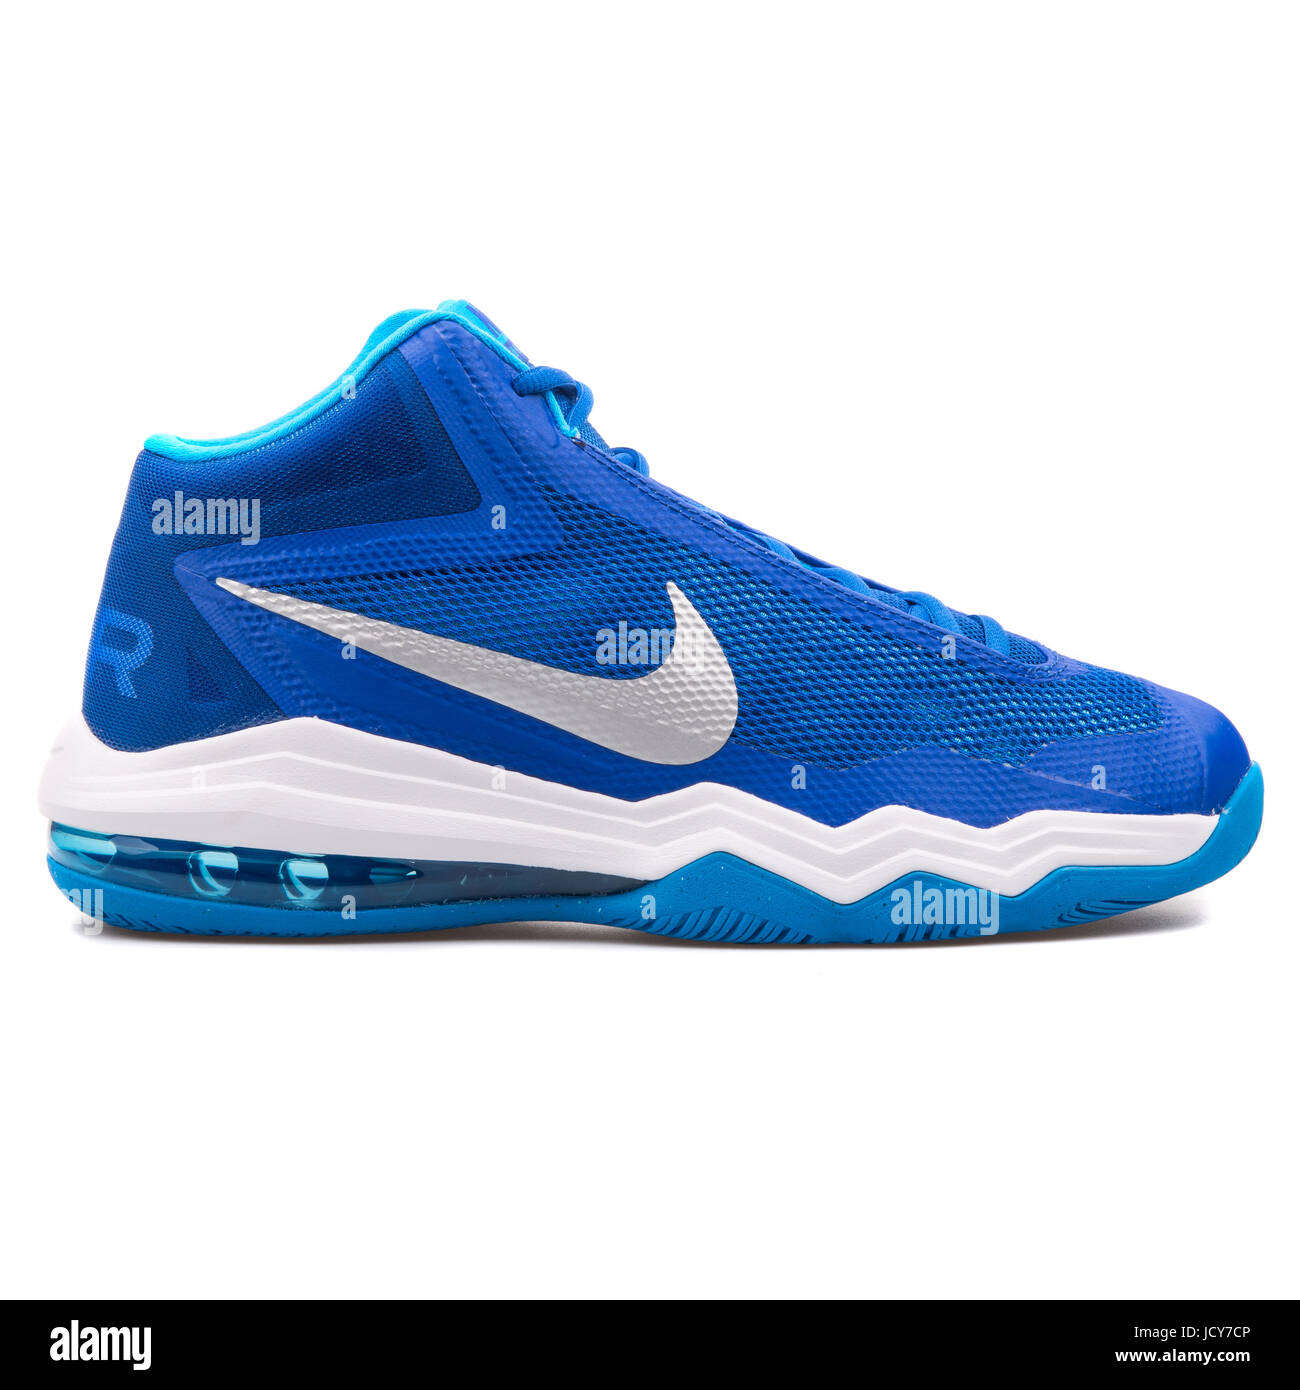 Nike Air Max Audacity TB blu e bianco Unisex scarpe da basket - 749166-403  Foto stock - Alamy